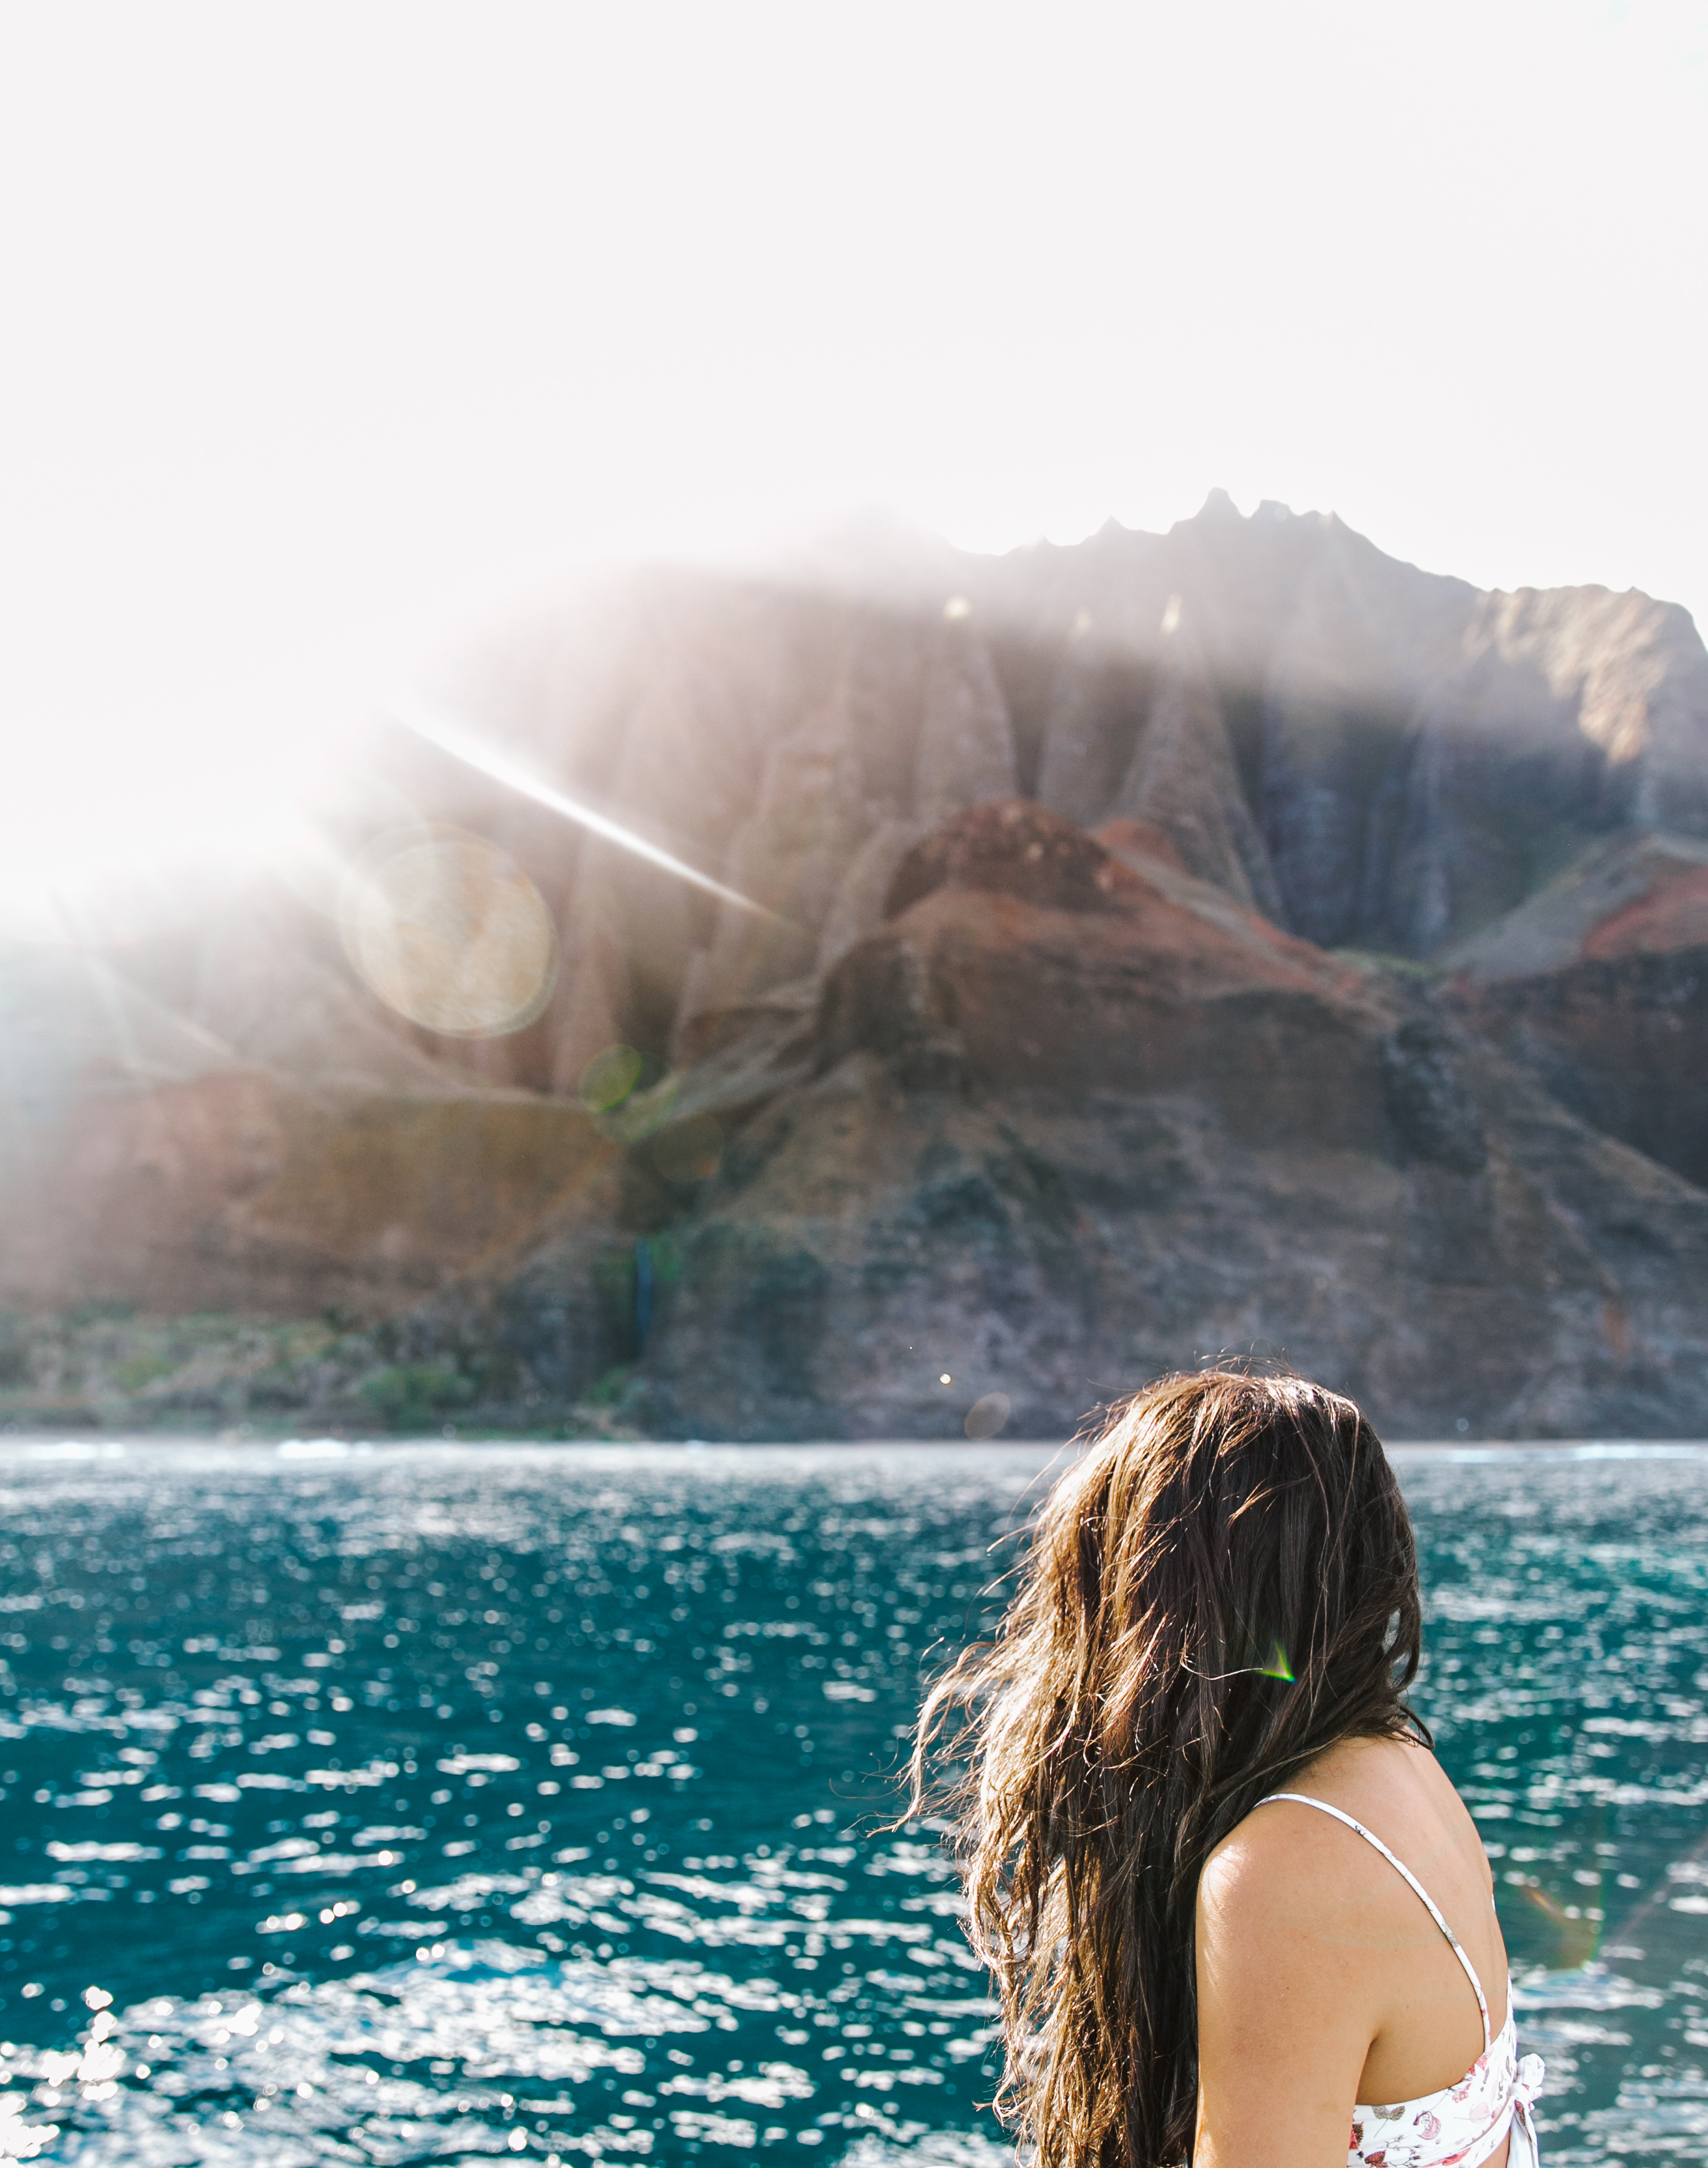 Go Blue Adventure | Blue Ocean Adventure Tours | Kauai Water Excursions | Best Kauai Excursions | Travel Guide to Kauai, Hawaii | Travel Tips for Kauai | Packing List for Kauai | Helpful Tips for Traveling to Kauai | Kauai Travel Guide | Hawaii Travel Guide | Why You Should Visit Hawaii | Napali Coast Boat Excursion | Activities To Do in Kauai | Best Vacation Places in the World via @elanaloo + elanaloo.com